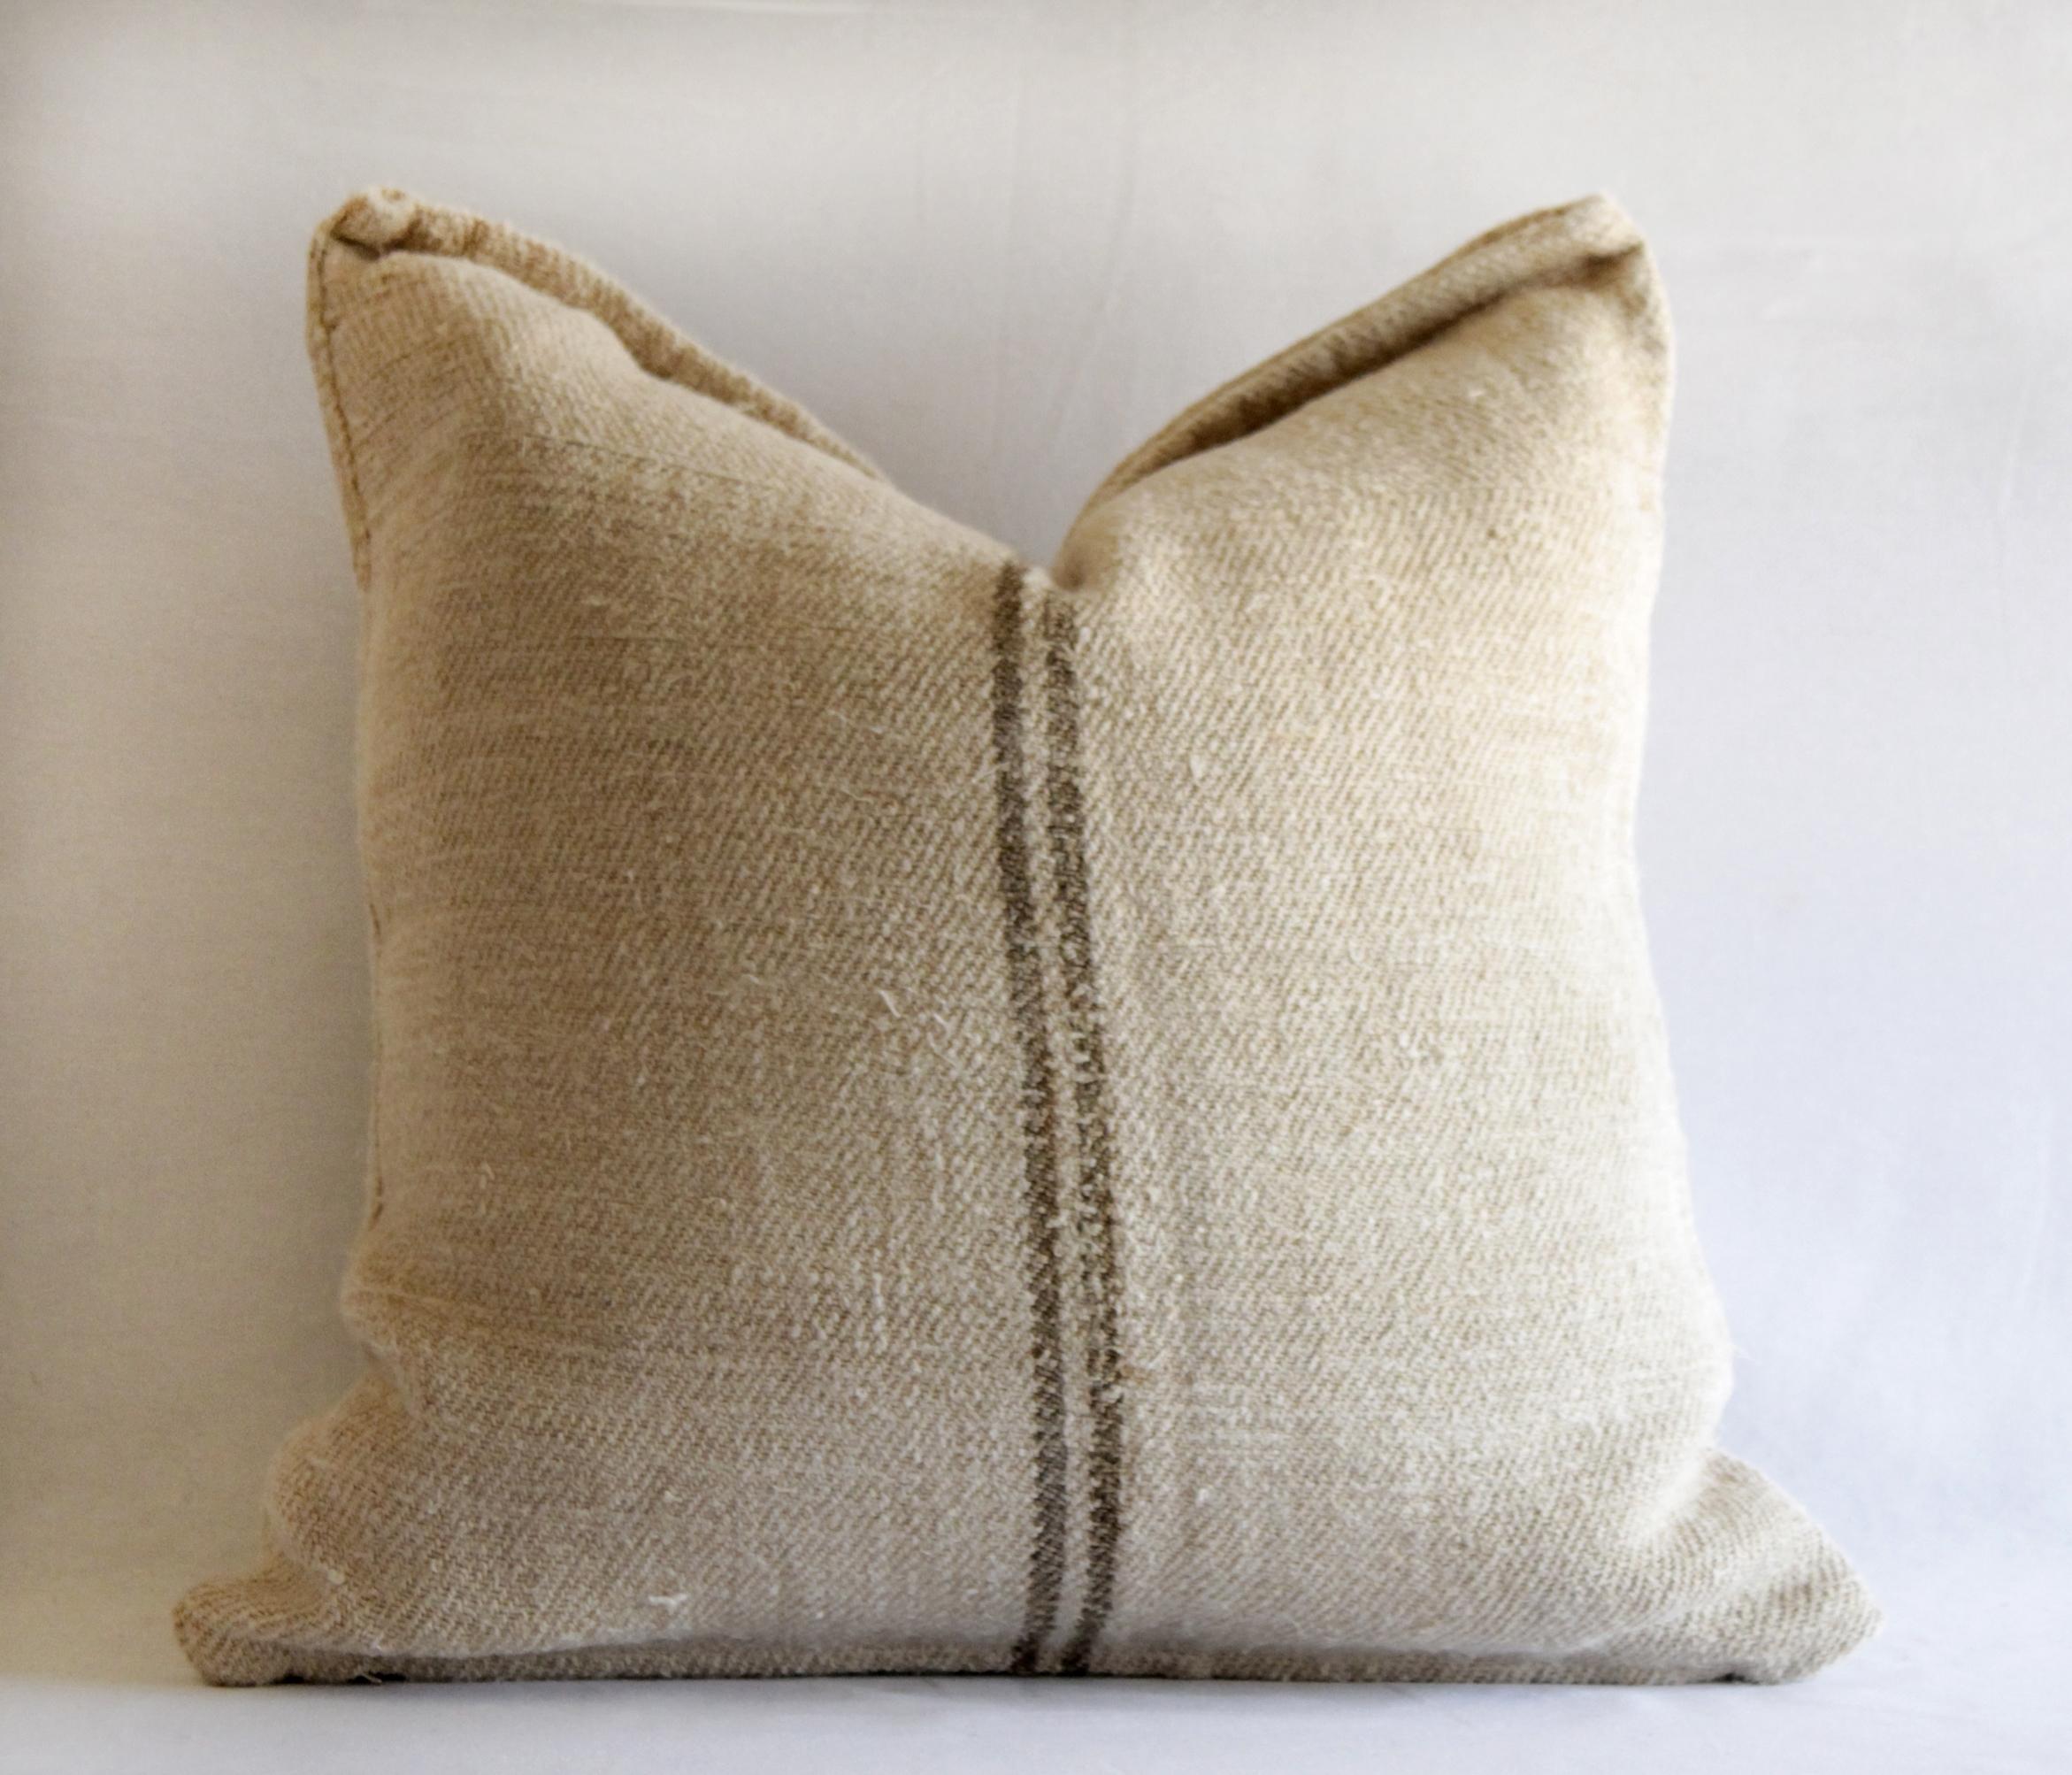 Vintage European grain sack pillows with dark brown stripe 
Measures: 21